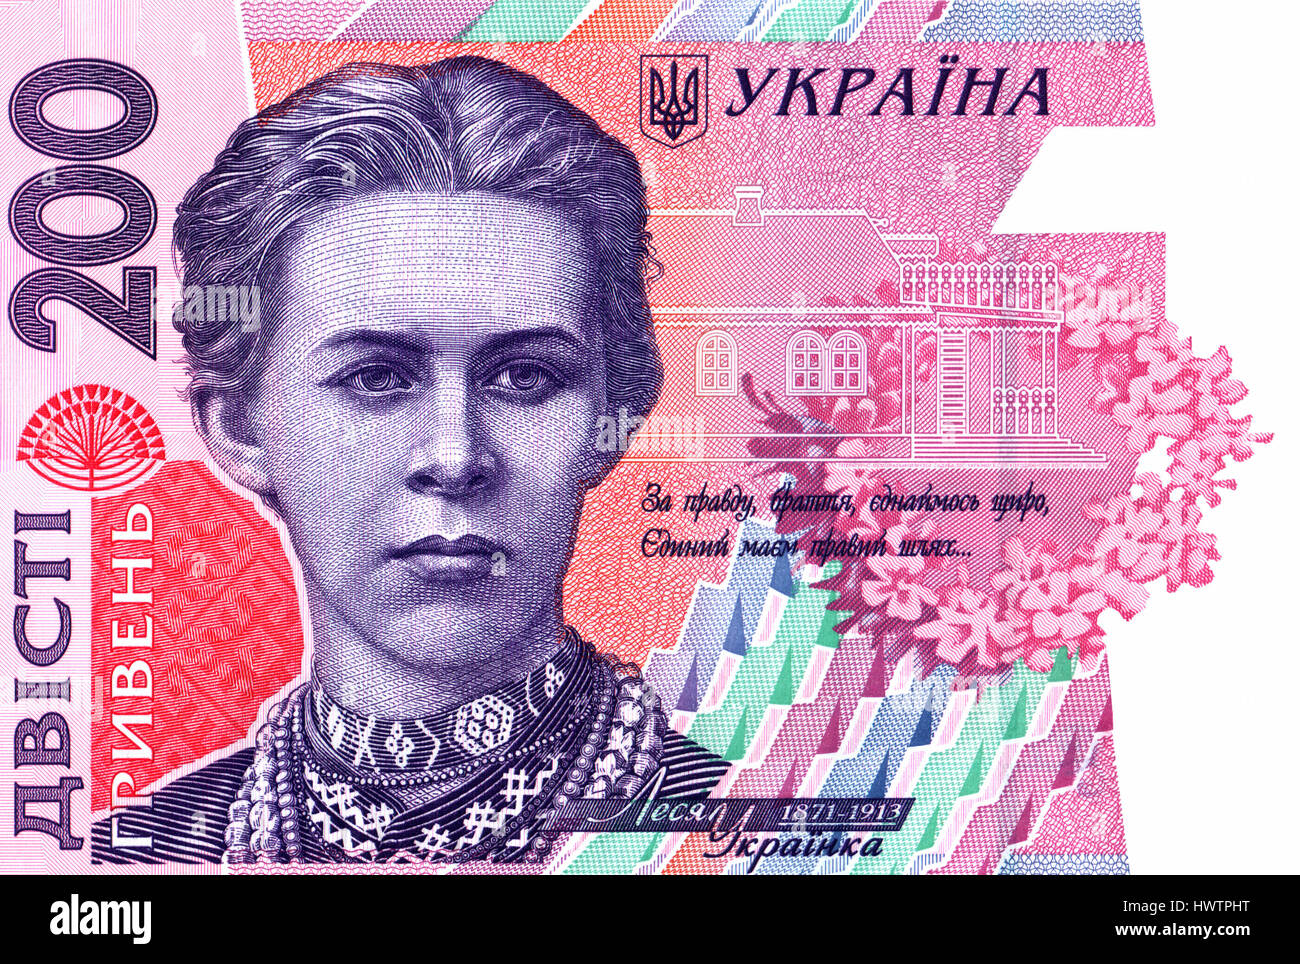 Fragment denomination two hundred ukrainian hryvna with portrait poet and writer Lesya Ukrainka (1871-1913) Stock Photo